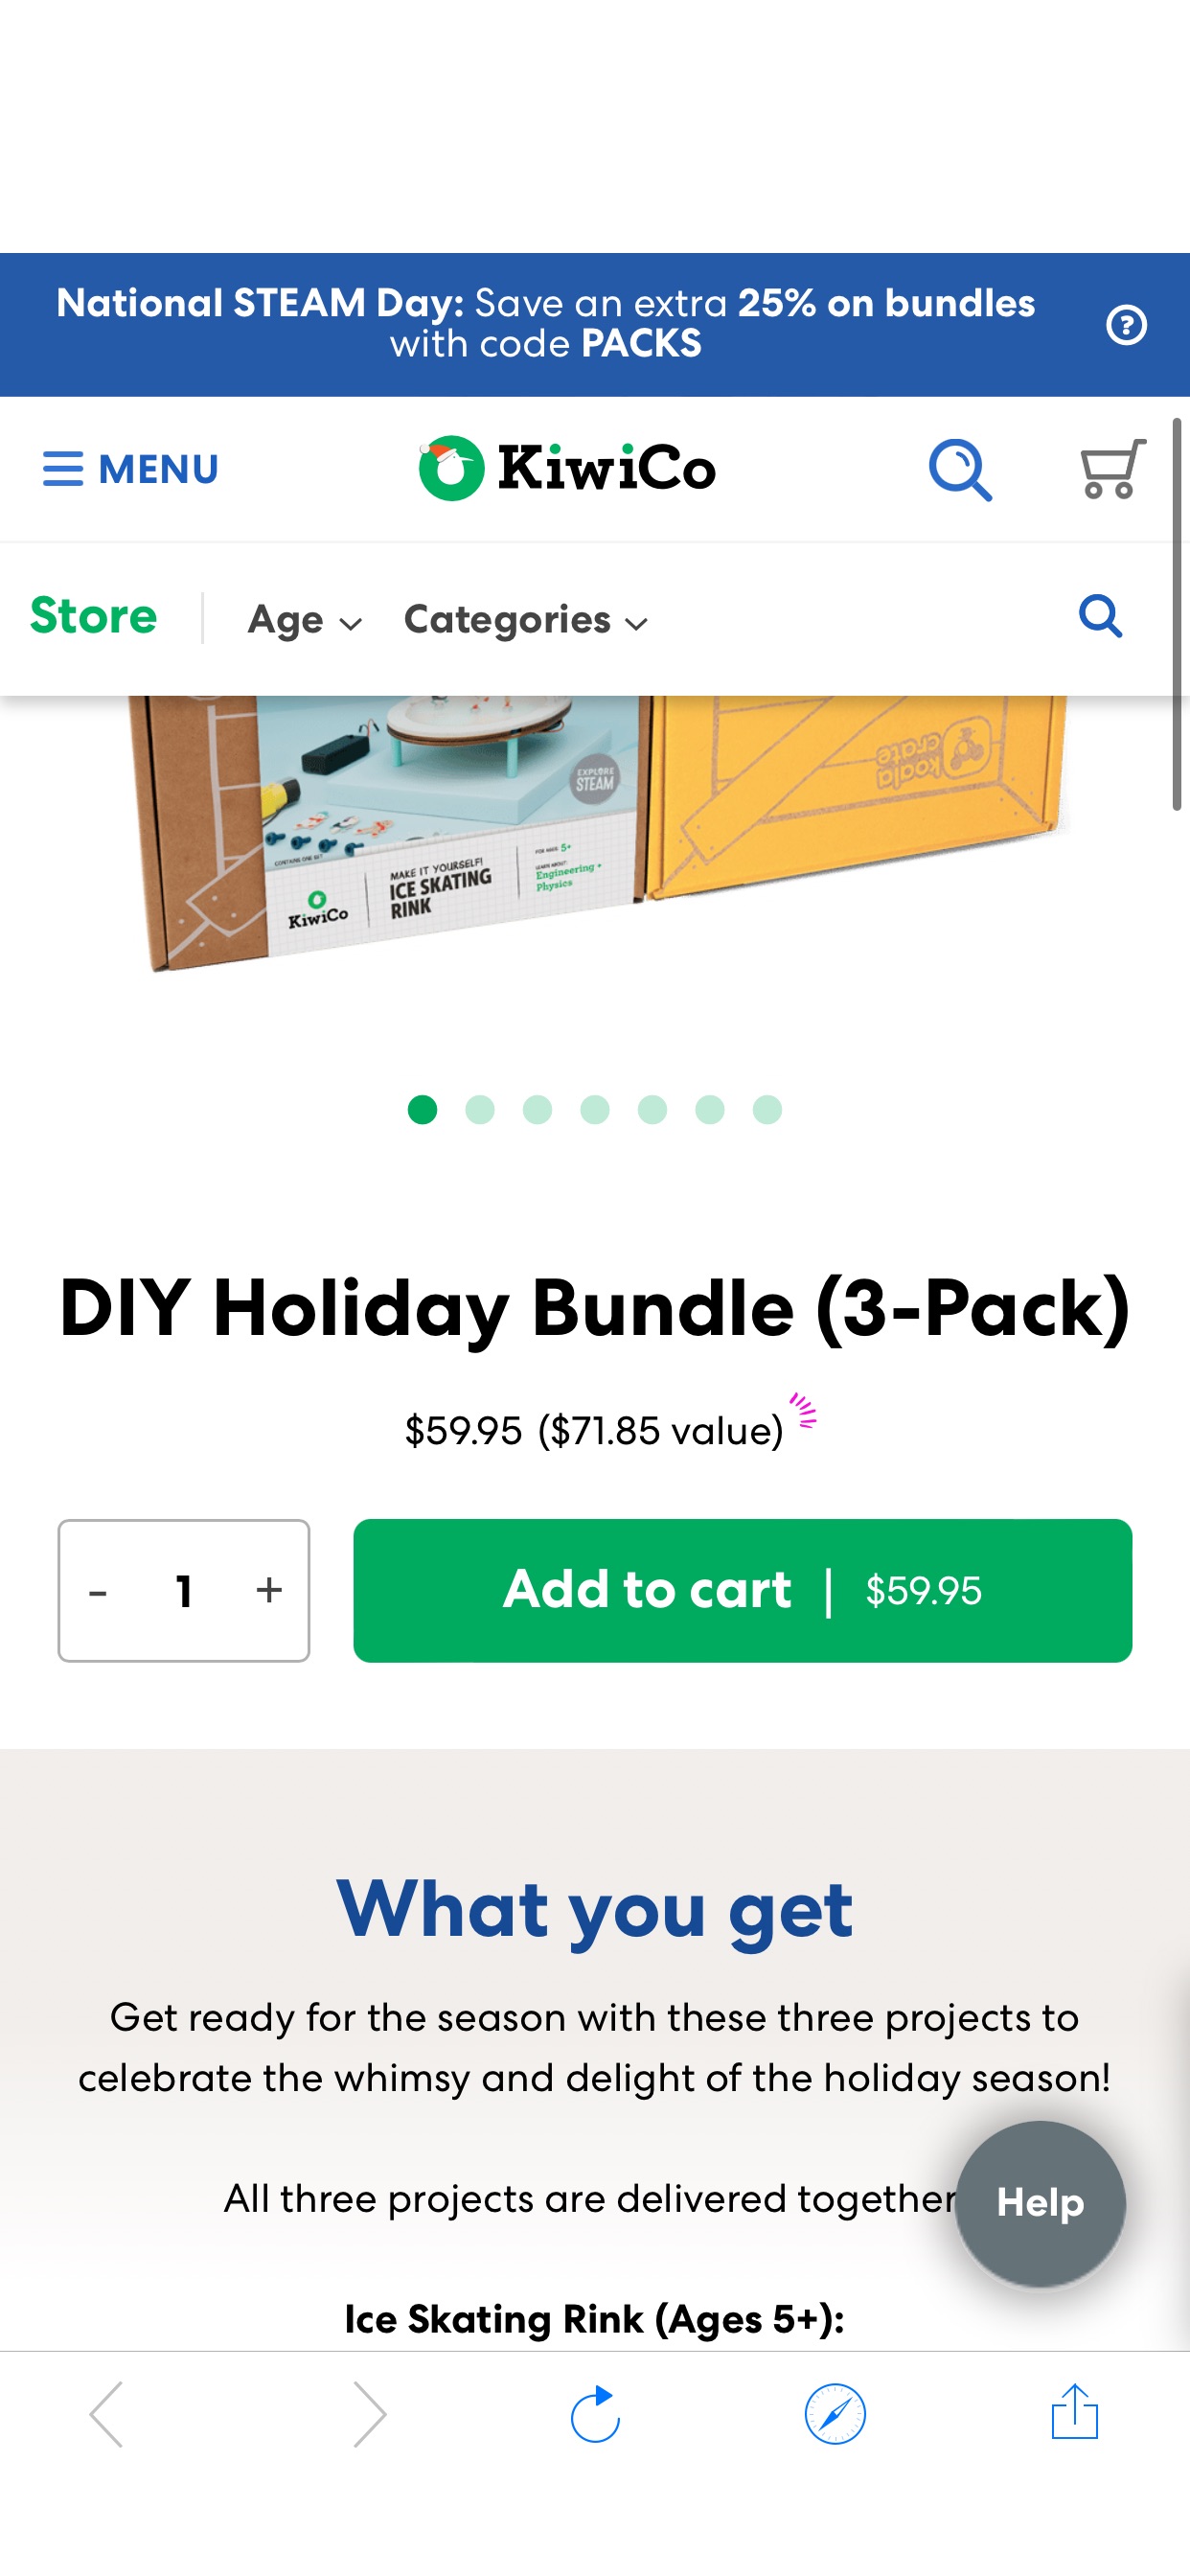 DIY Holiday Bundle (3-Pack) | KiwiCo
仅限今日！【折后$44.96】Kiwico DIY 假日手工盒子 3套

折扣码：PACKS